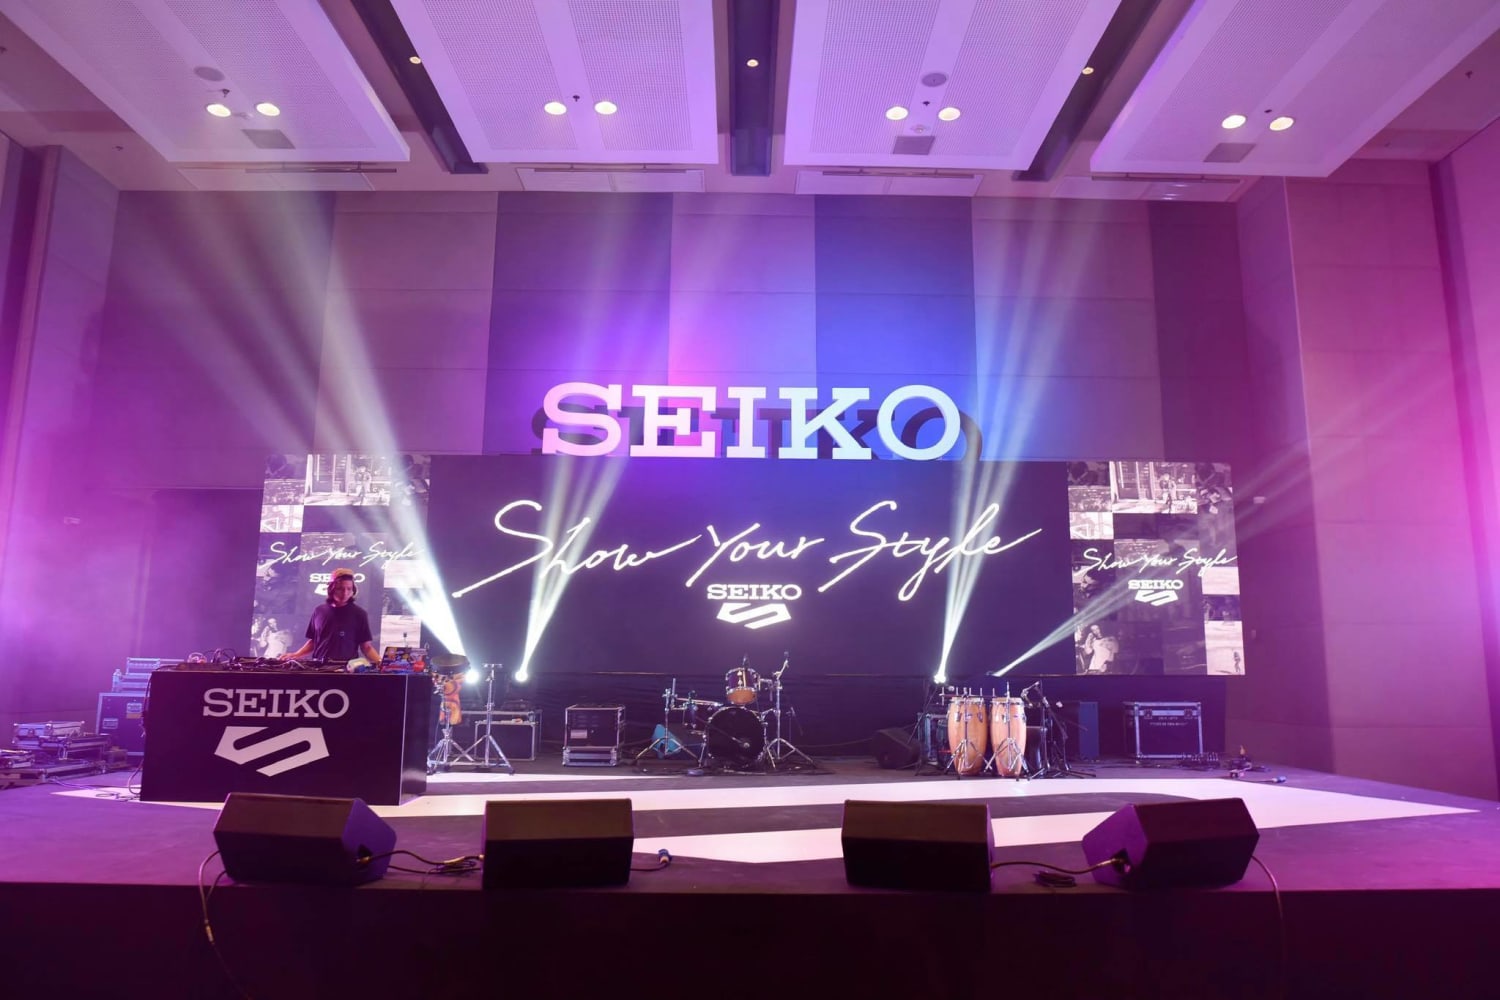 Seiko 5 Sports: A Seiko classic sports a New Look